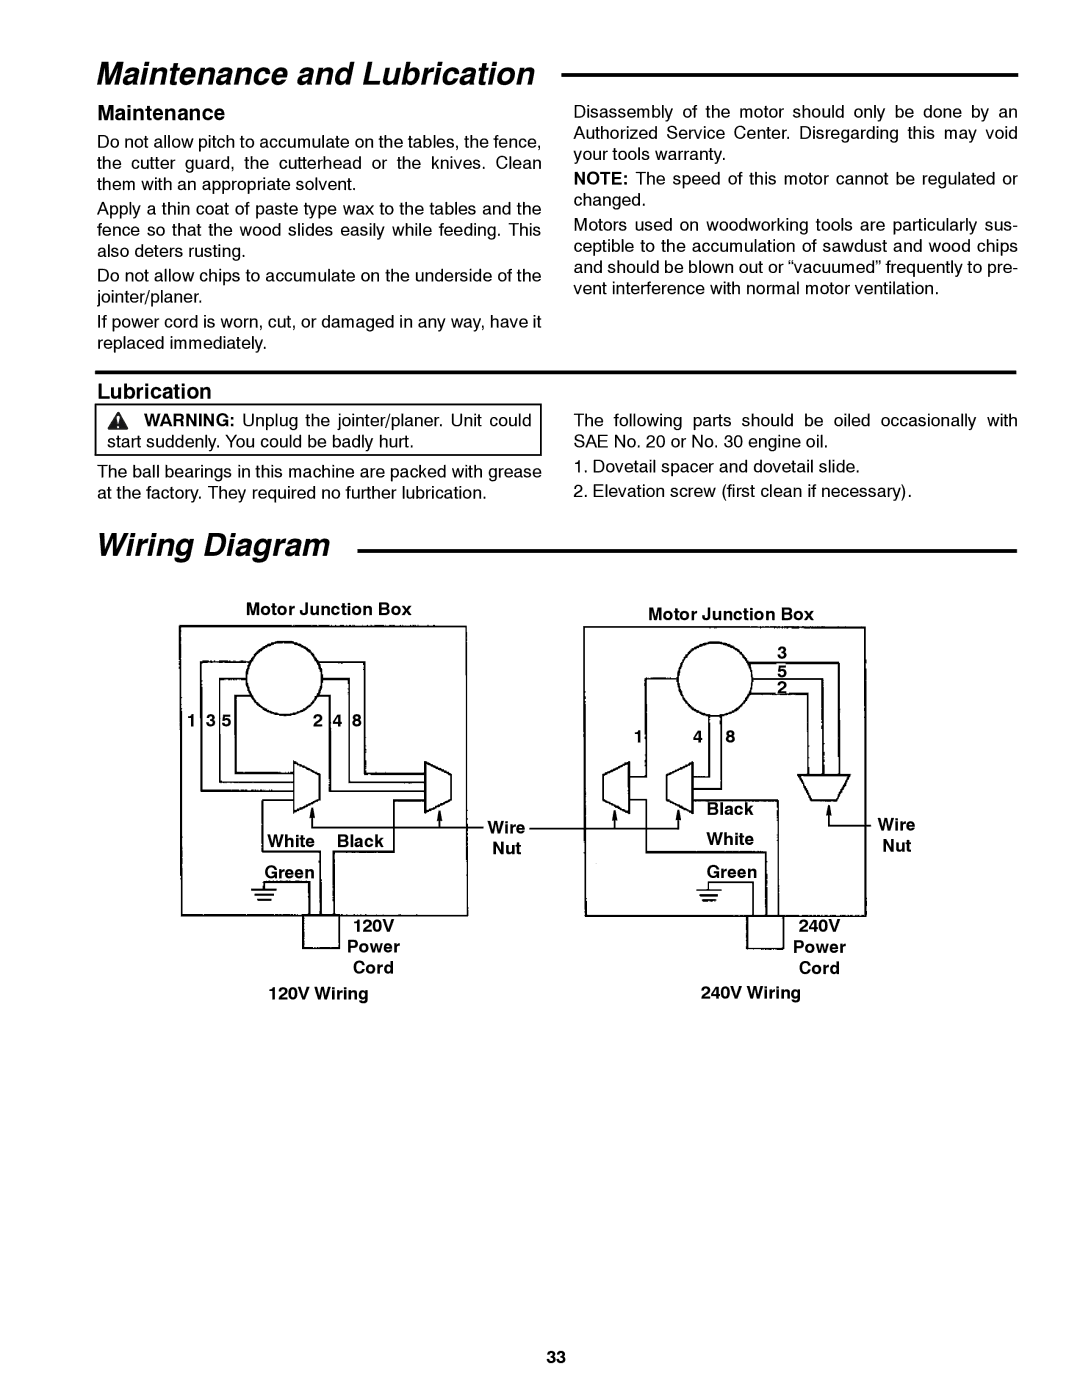 RIDGID JP06101 manual Maintenance and Lubrication, Wiring Diagram 